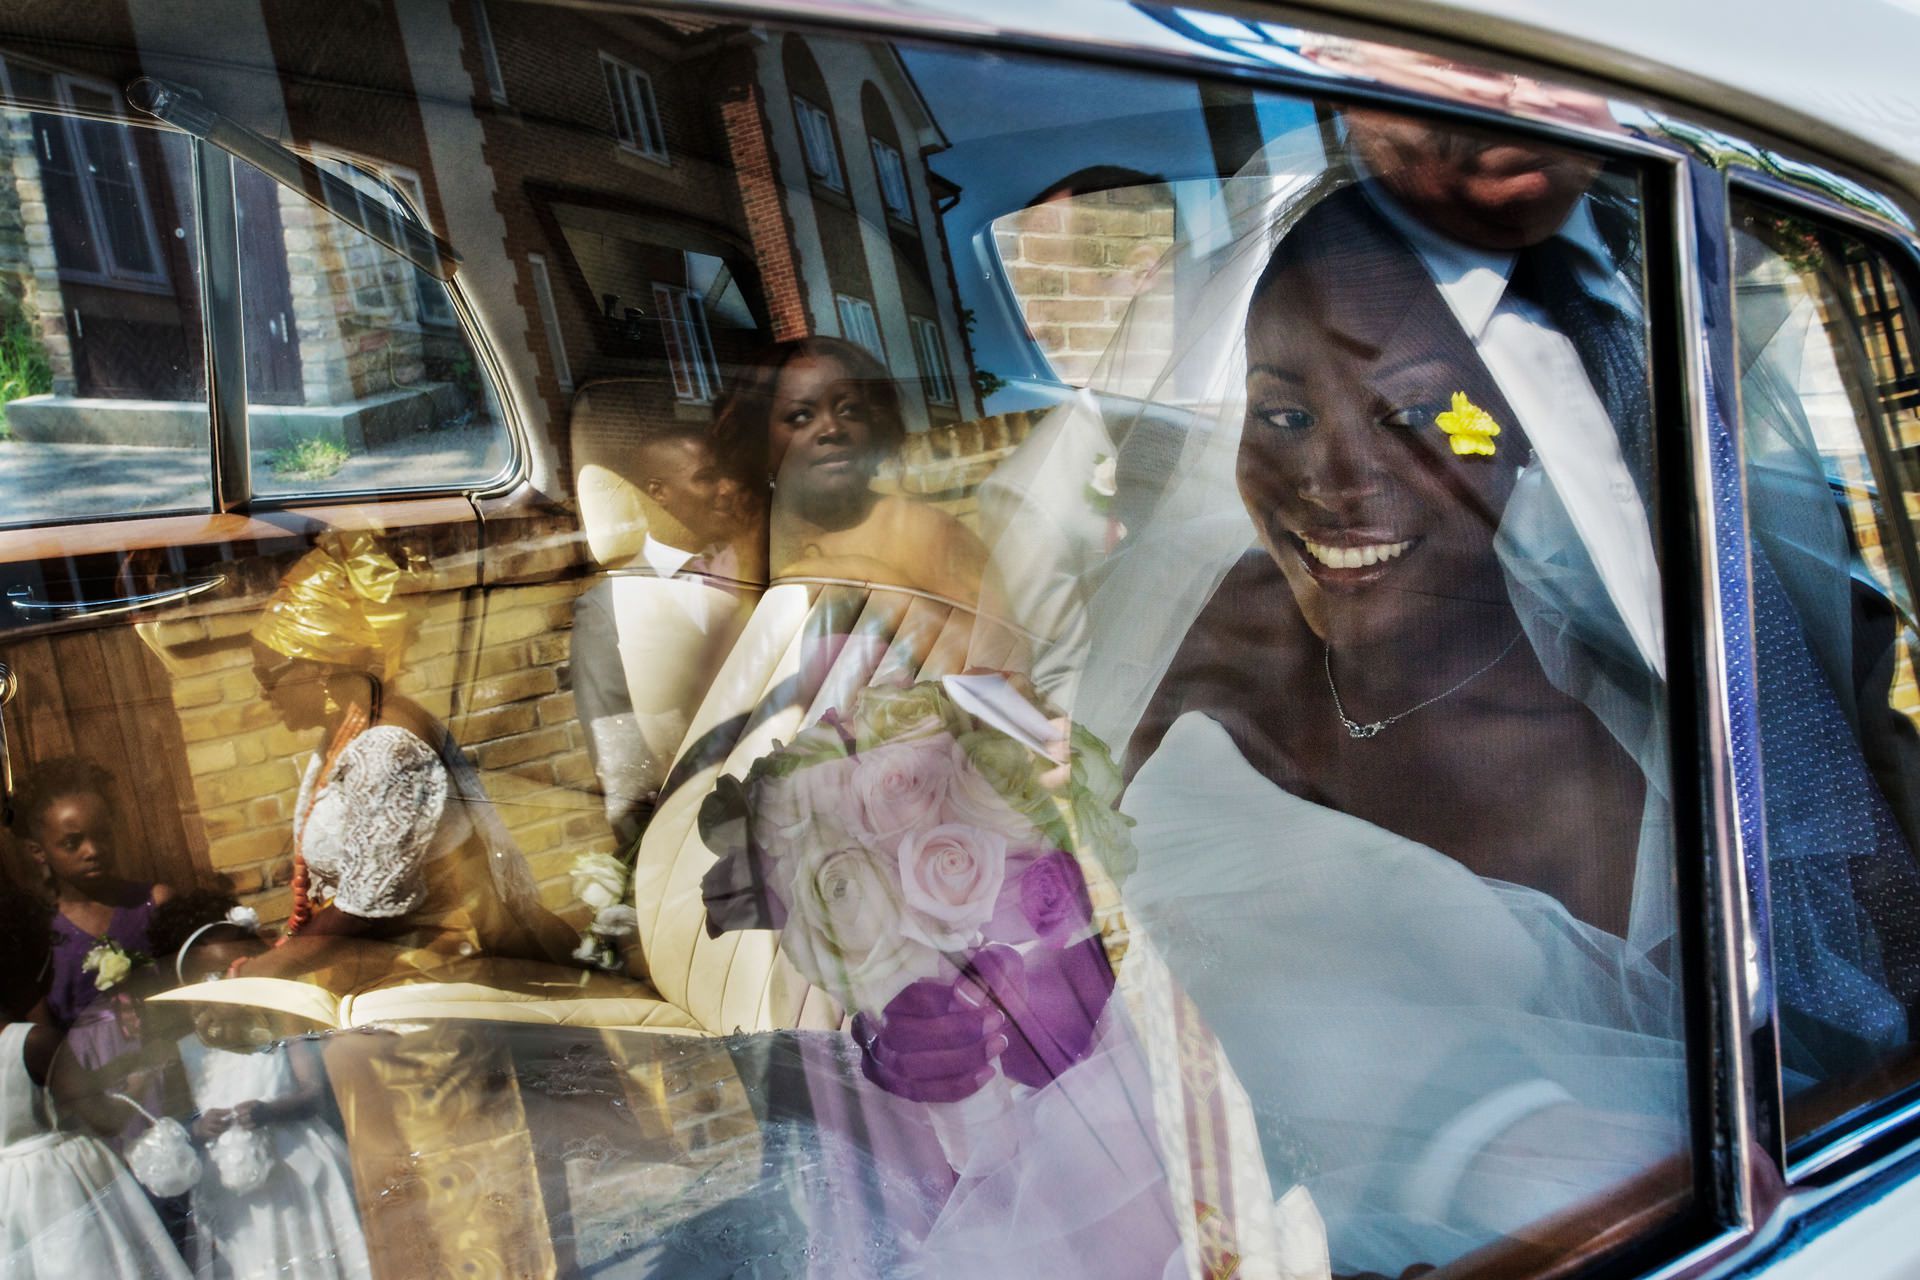 Nigerian wedding bride in the car behind the glass window